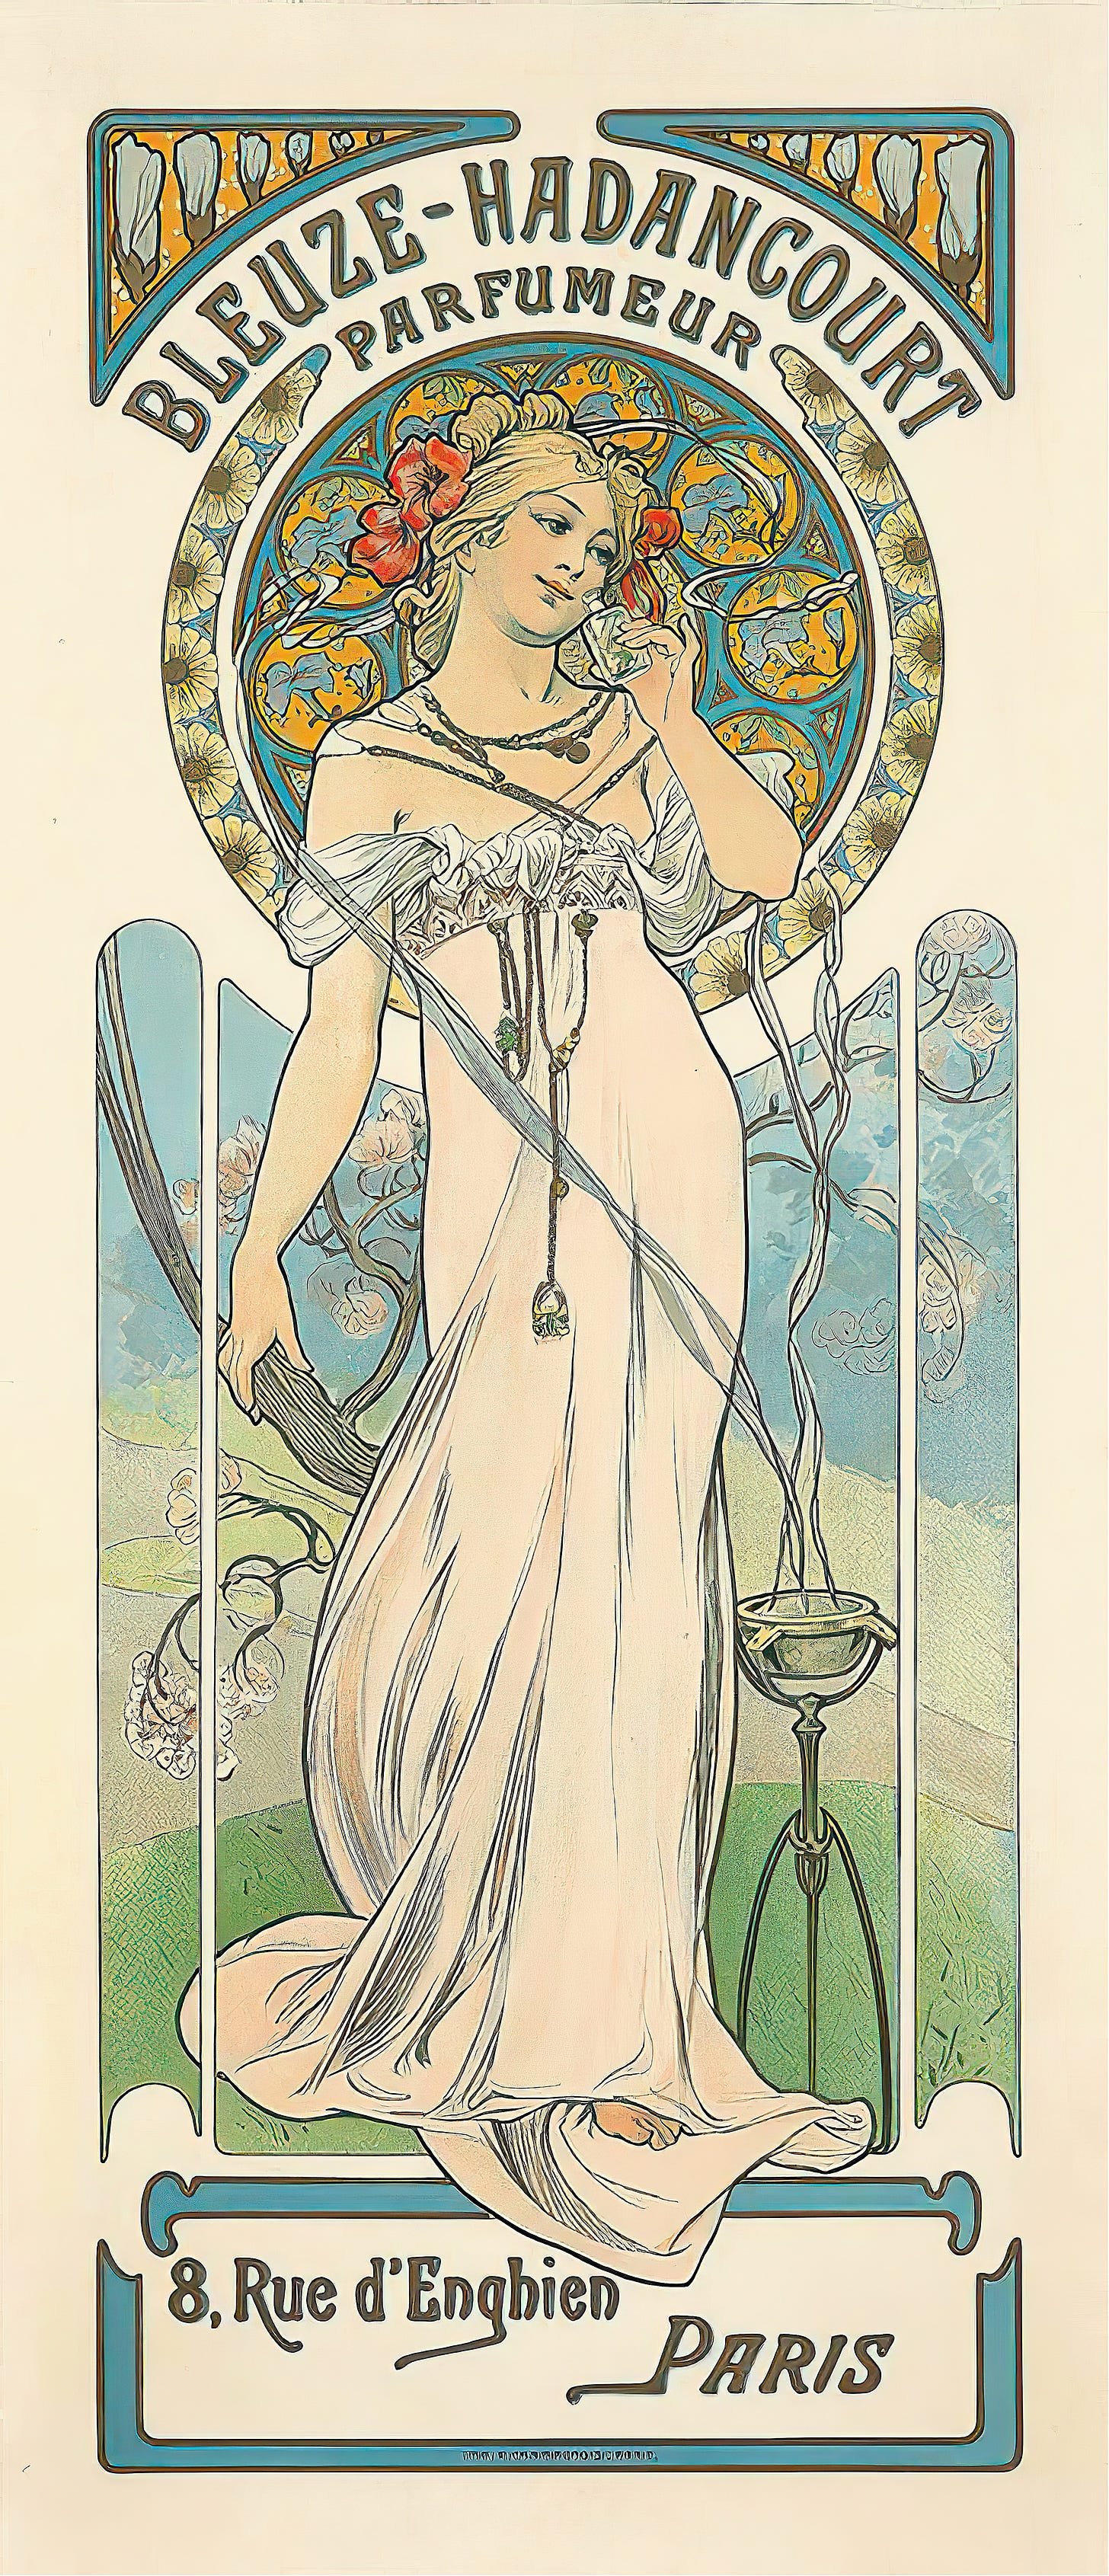 Bleuze-Hadancourt Parfumeur (Ca. 1899) by Alphonse Mucha